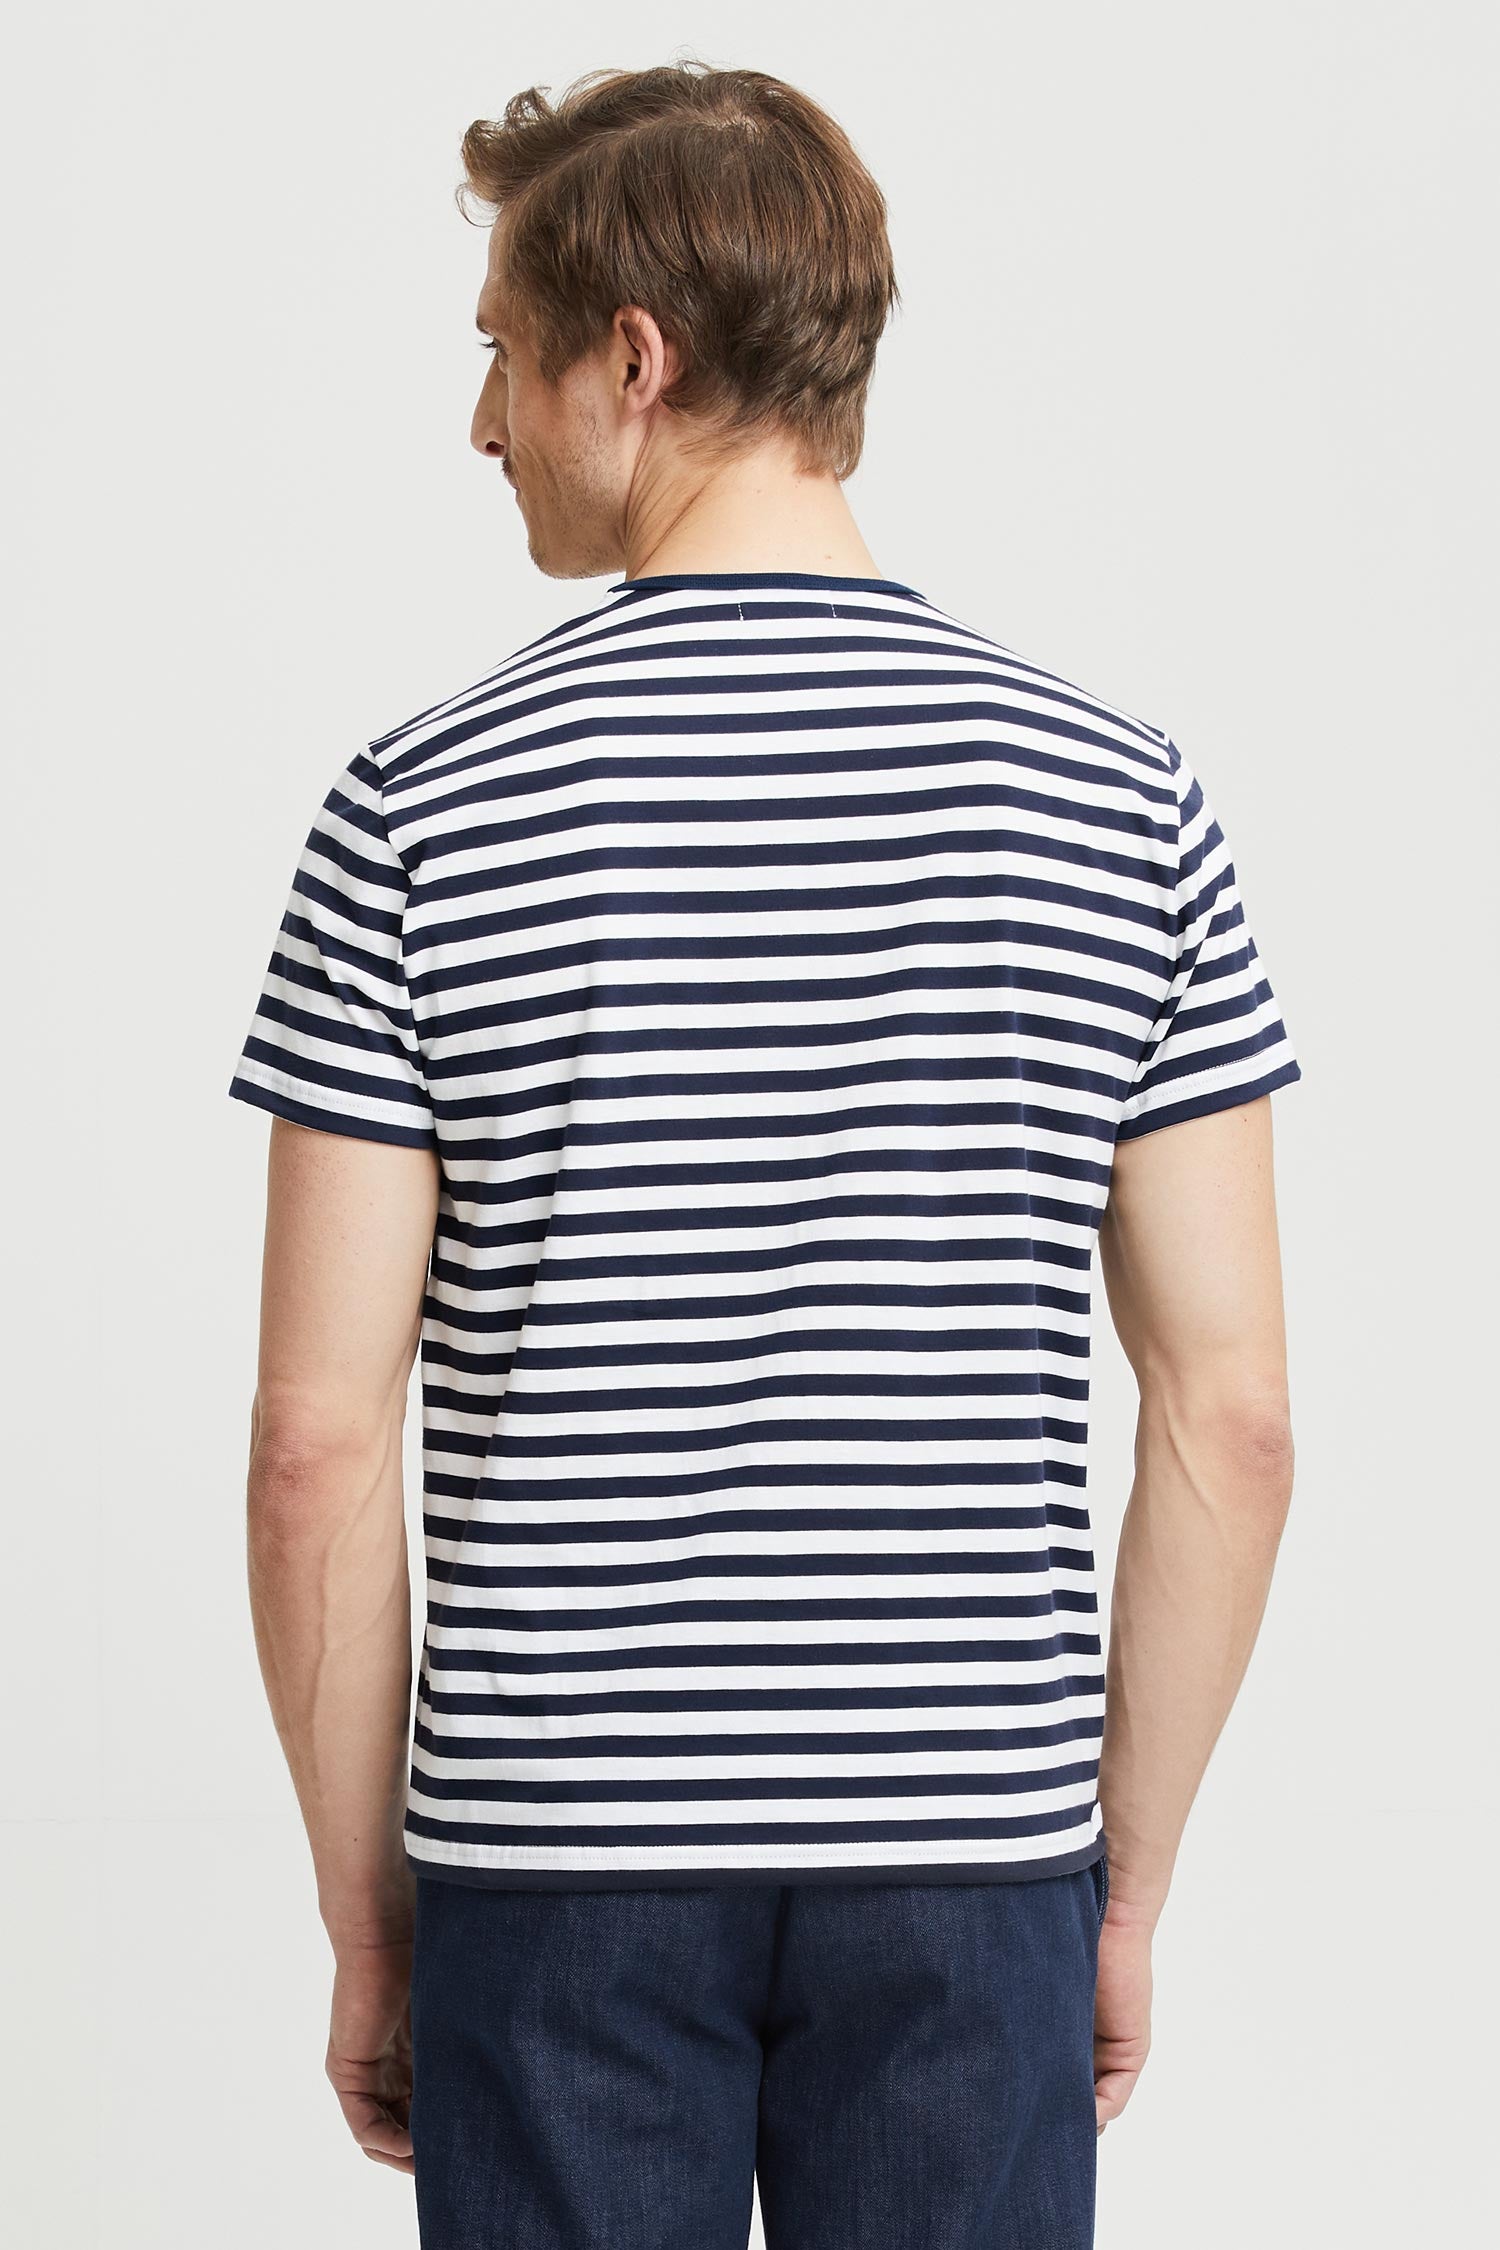 Frenn Hannes sustainable premium quality GOTS organic cotton striped t-shirt blue and white